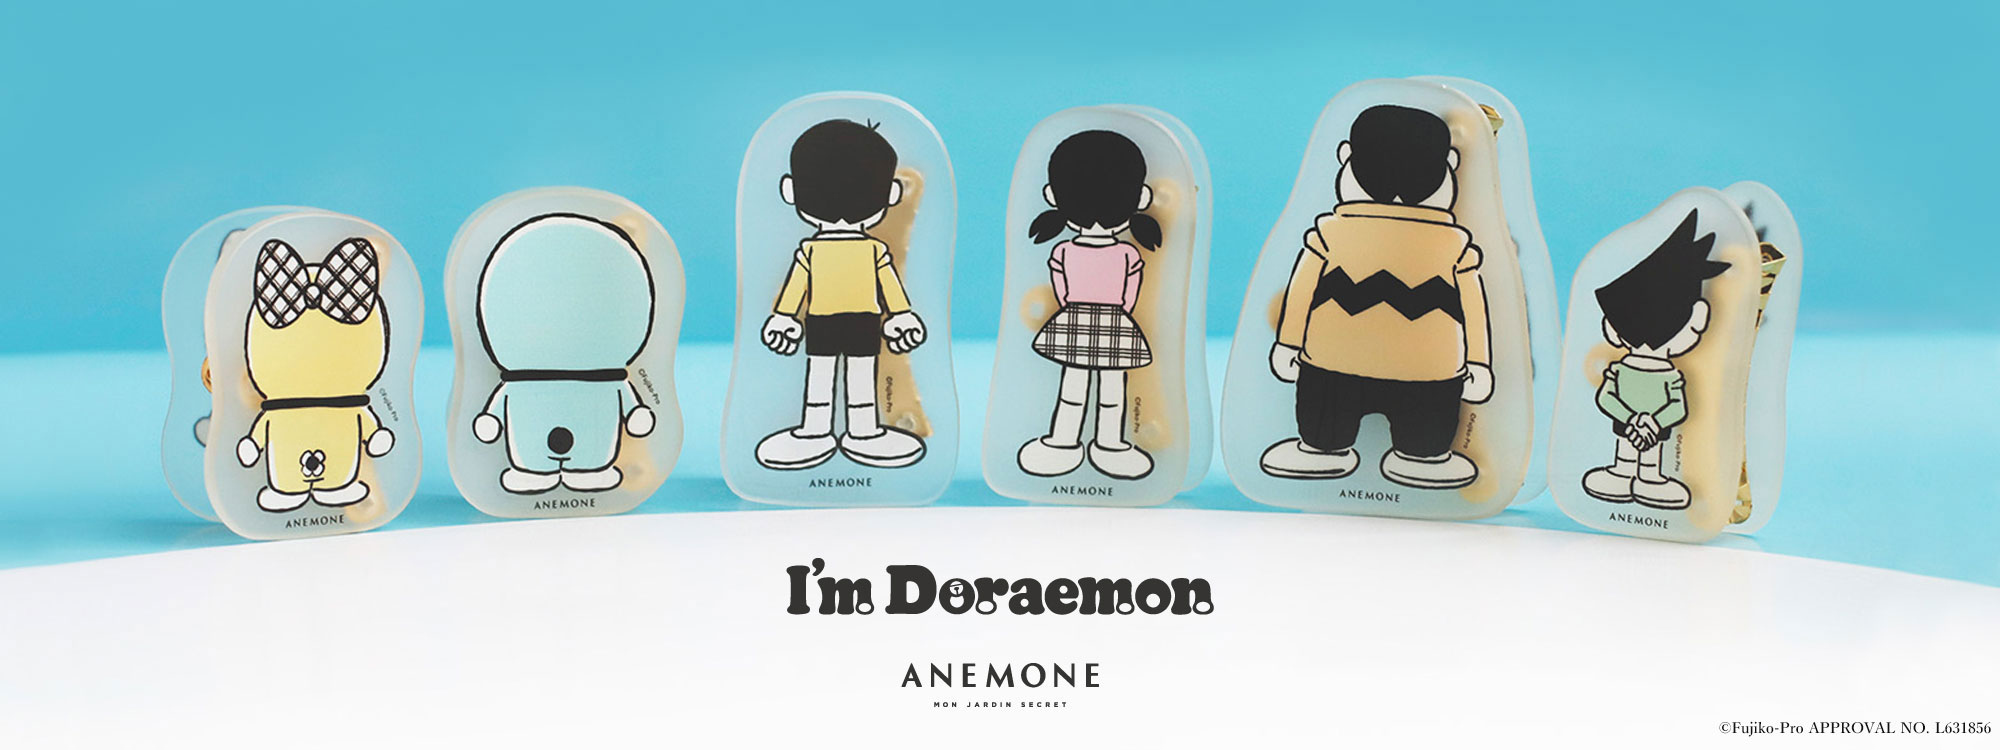 I‘m Doraemon * ANEMONE